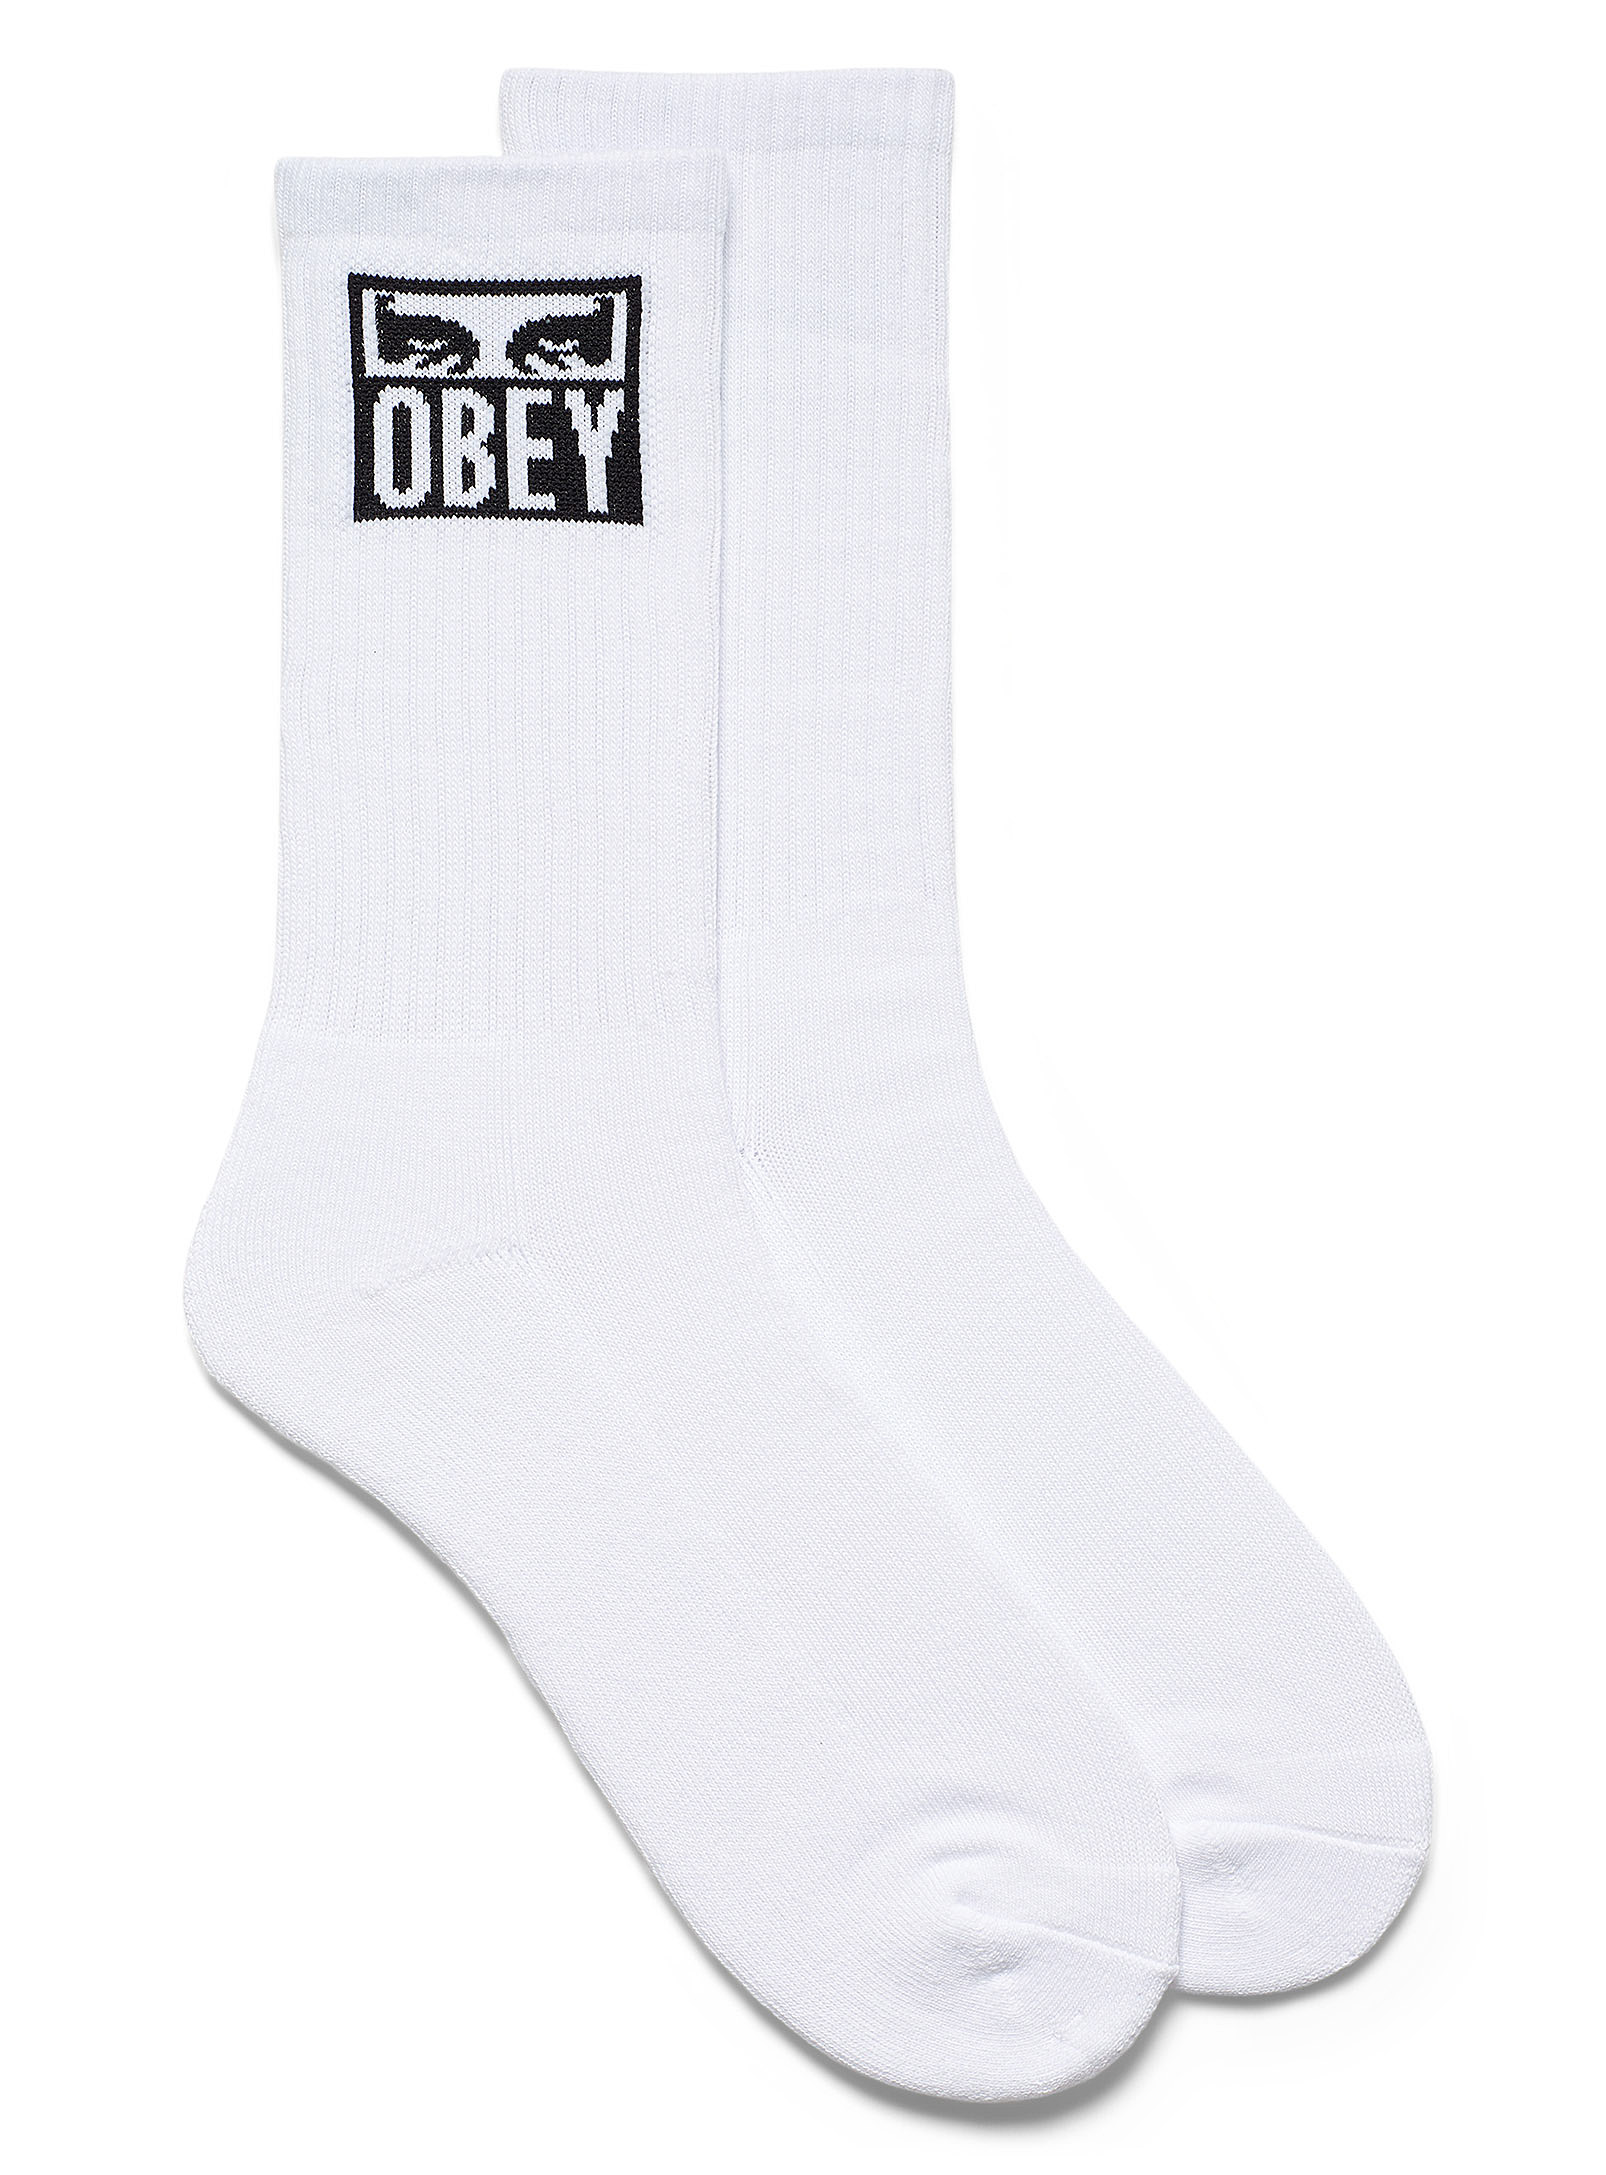 Obey - Men's The Creeper ribbed socks